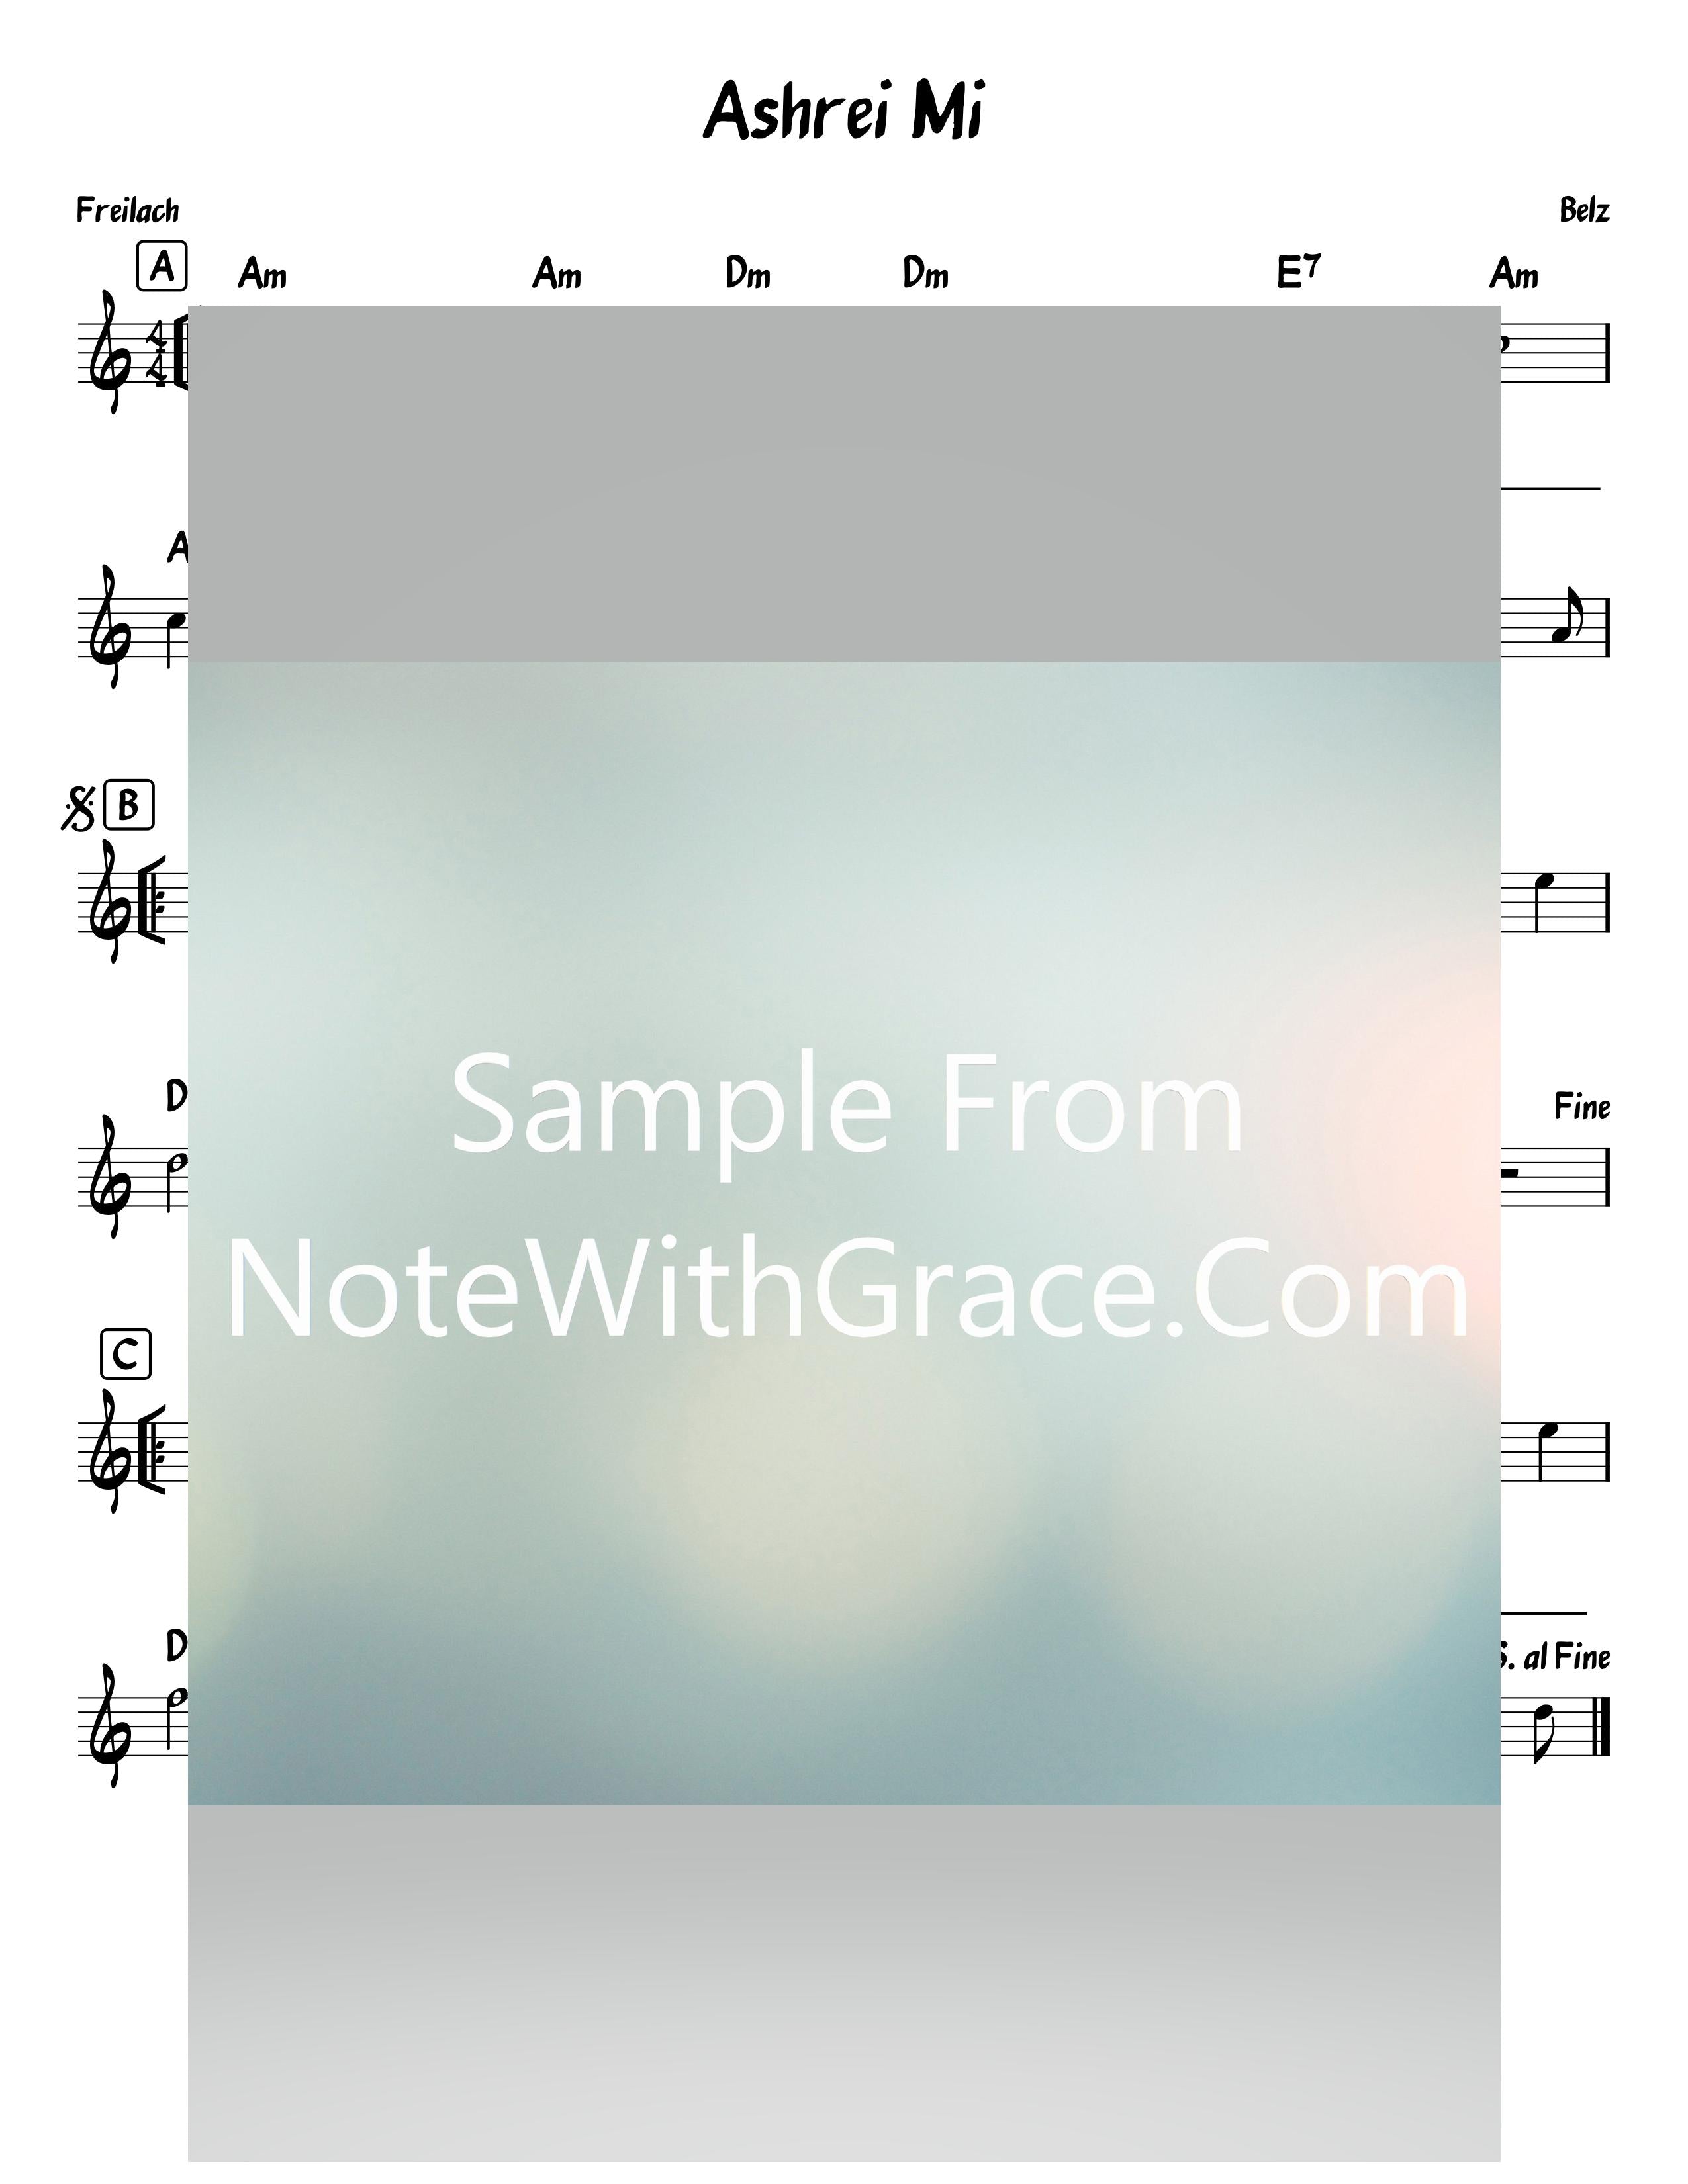 Ashrei Mi Sh'gadol Batorah Lead Sheet (Belz)-Sheet music-NoteWithGrace.com